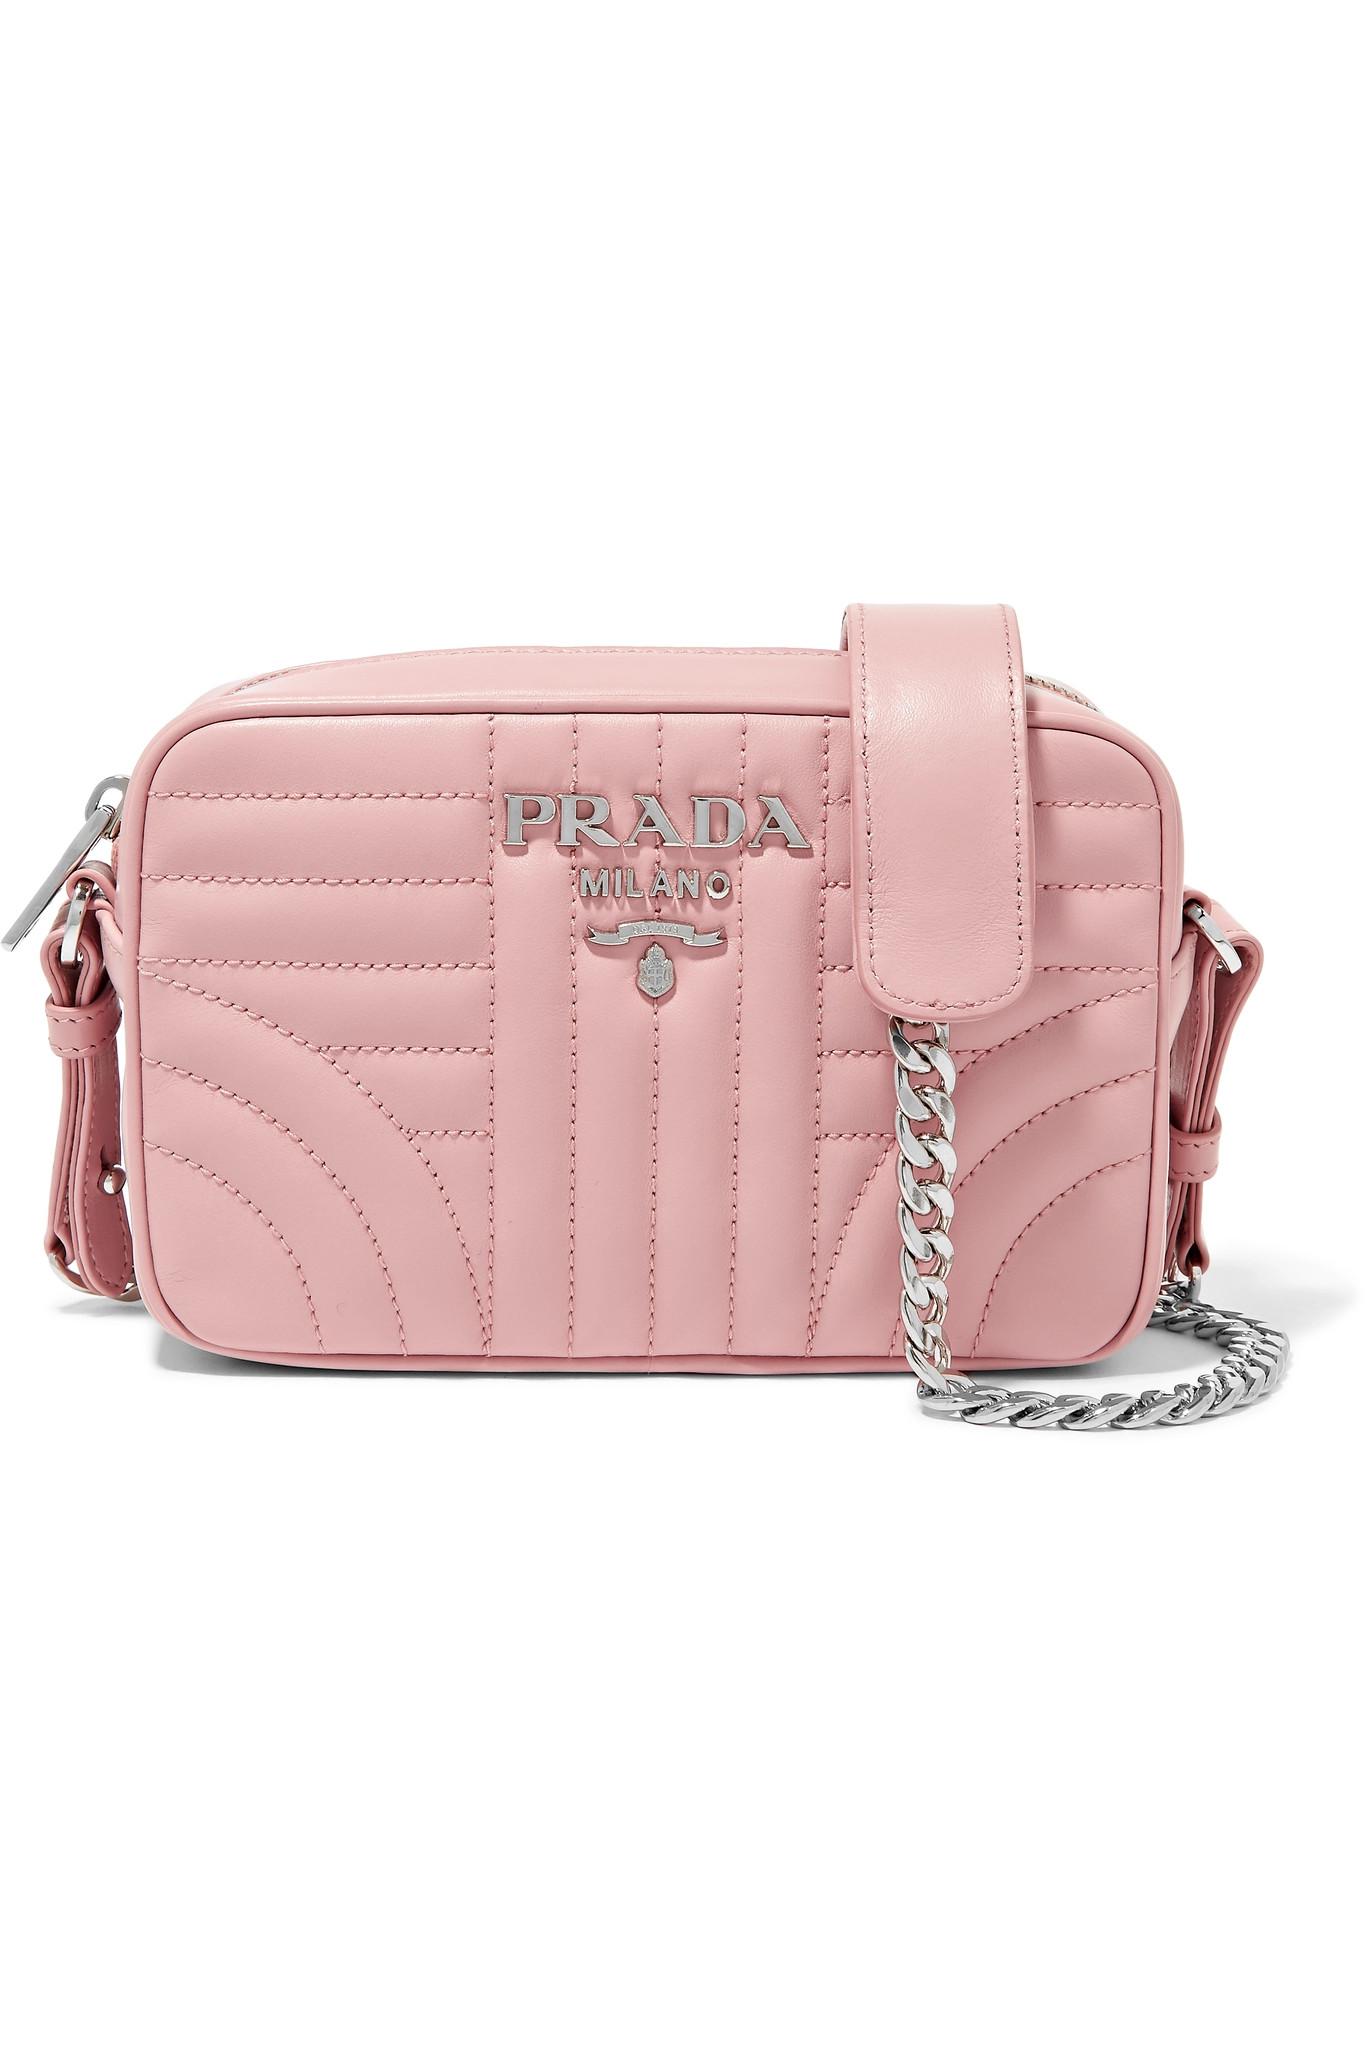 prada pink camera bag, OFF 77%,Cheap price!